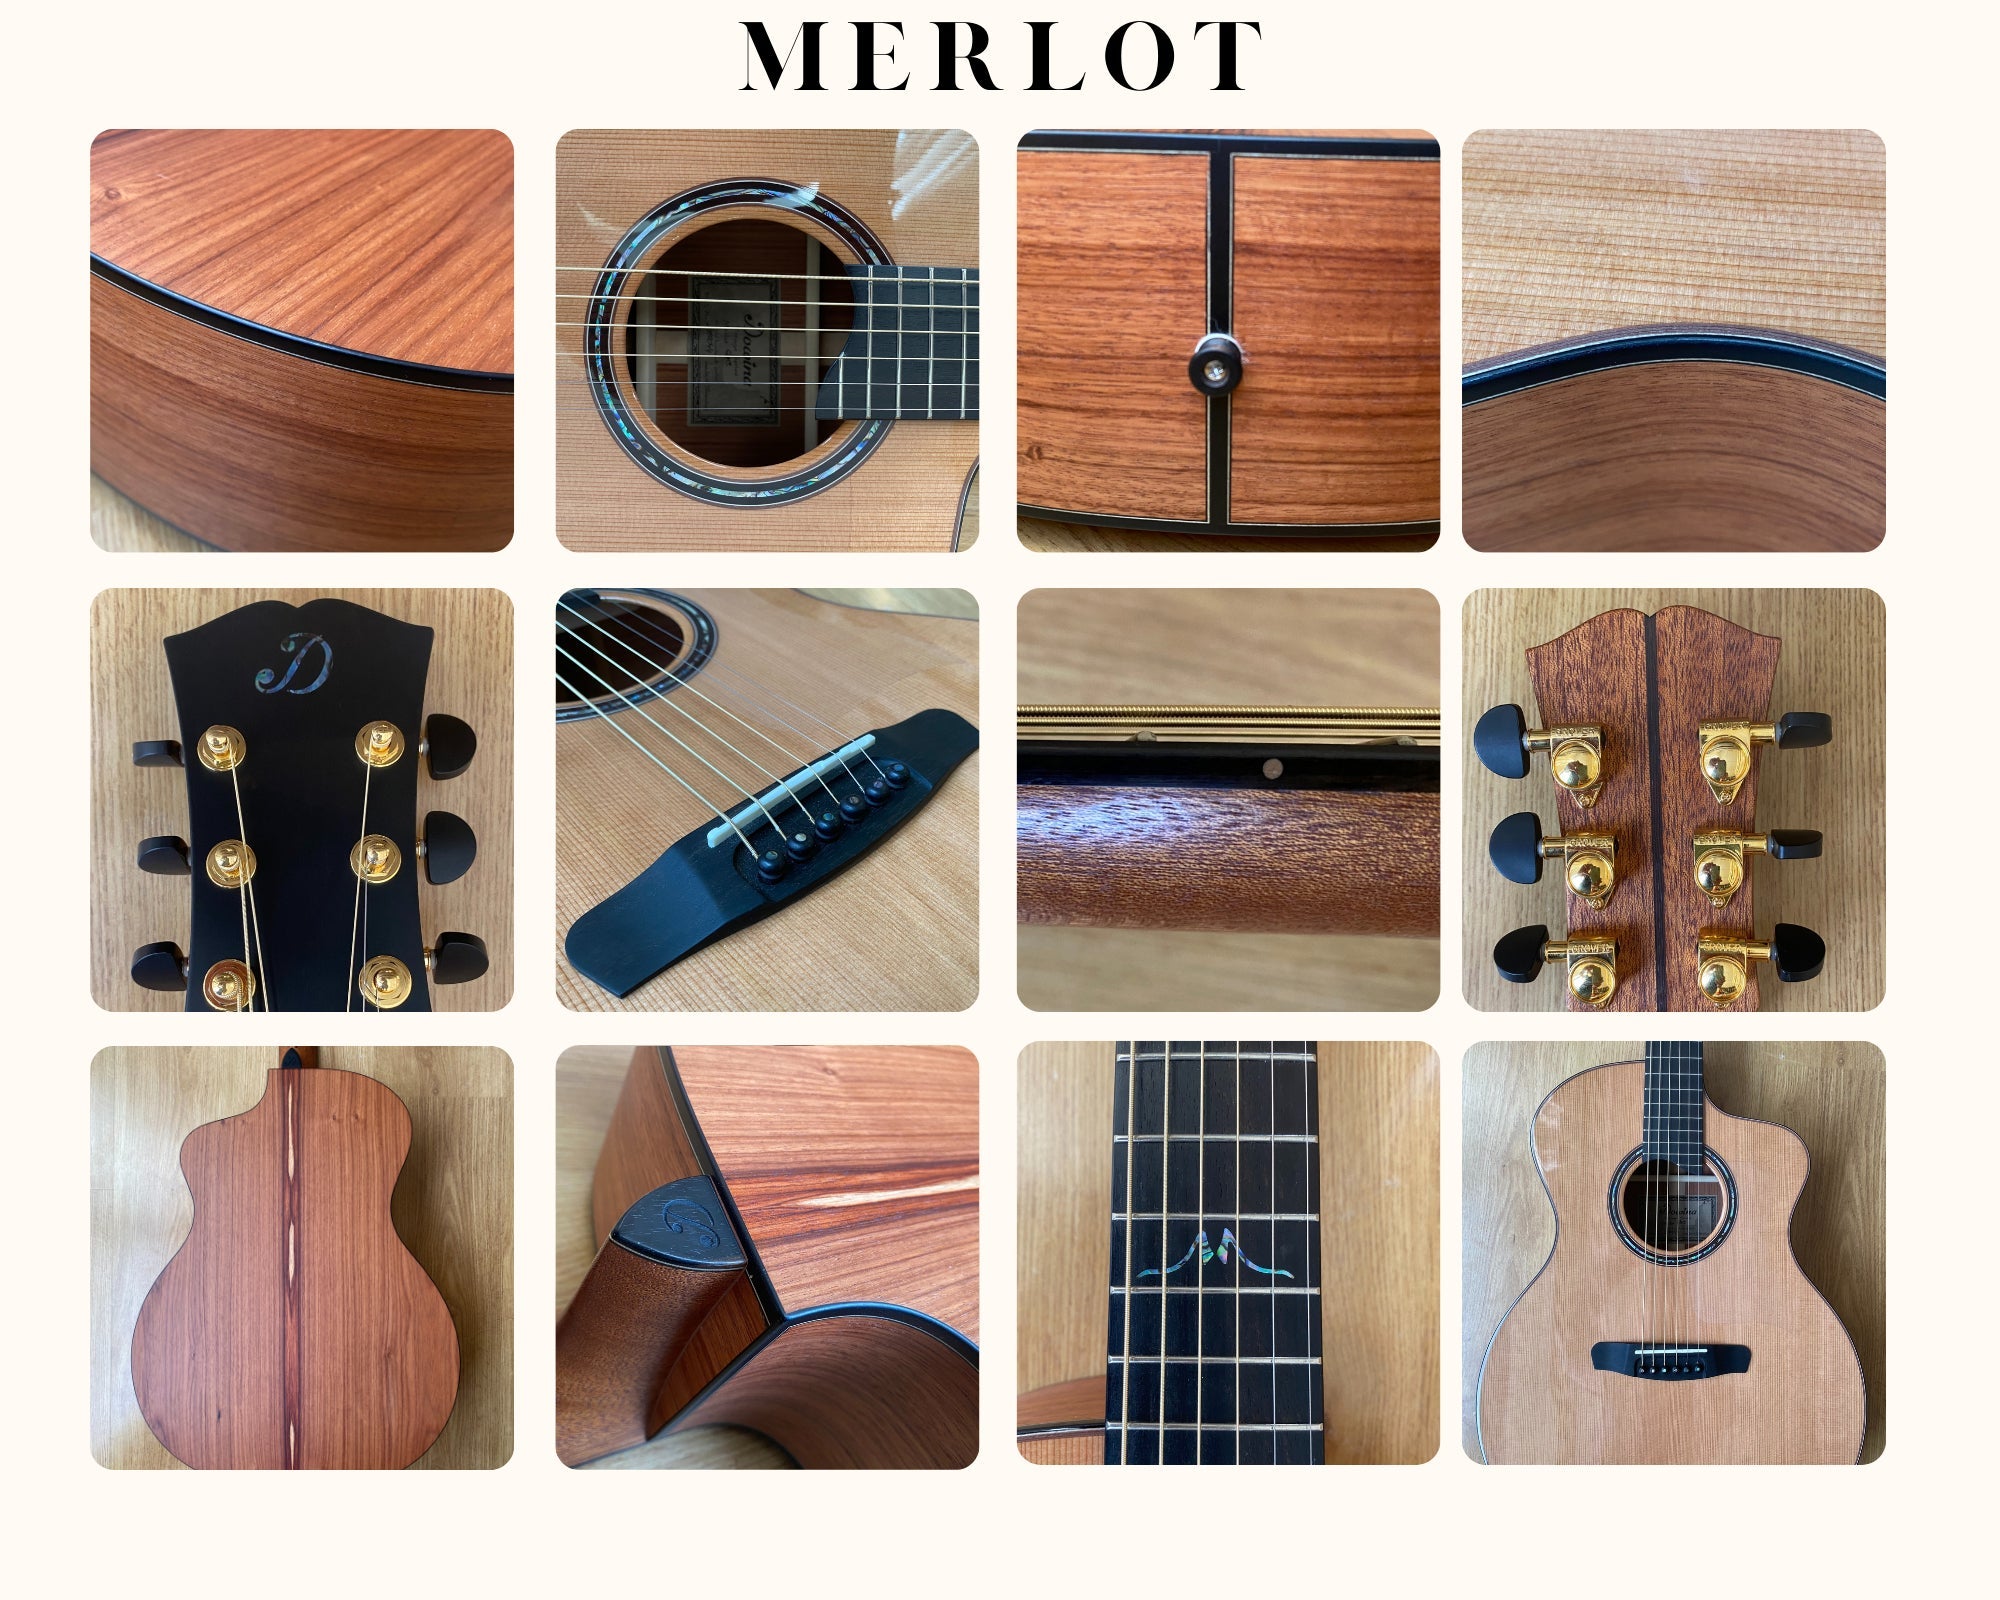 Dowina Merlot GAc / Macacauba (used), Acoustic Guitar for sale at Richards Guitars.